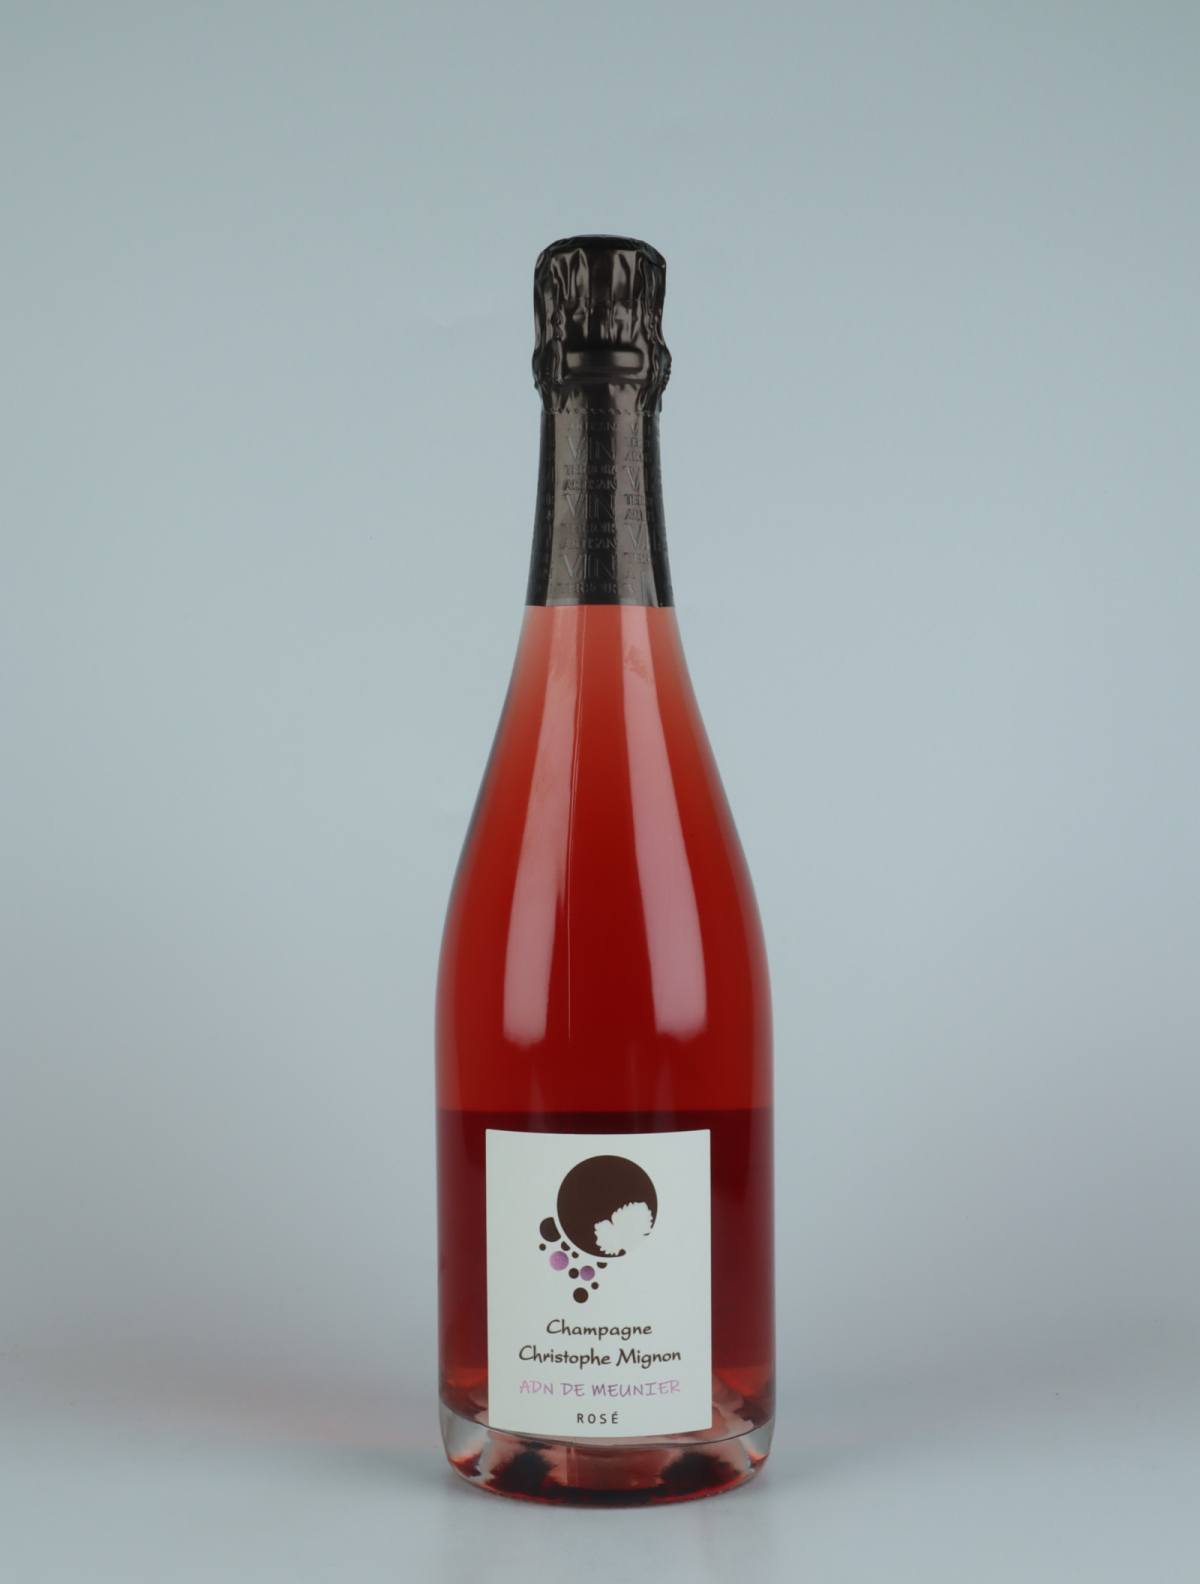 A bottle N.V. (2017/2018) ADN de Meunier Rose Extra Brut Sparkling from Christophe Mignon, Champagne in France